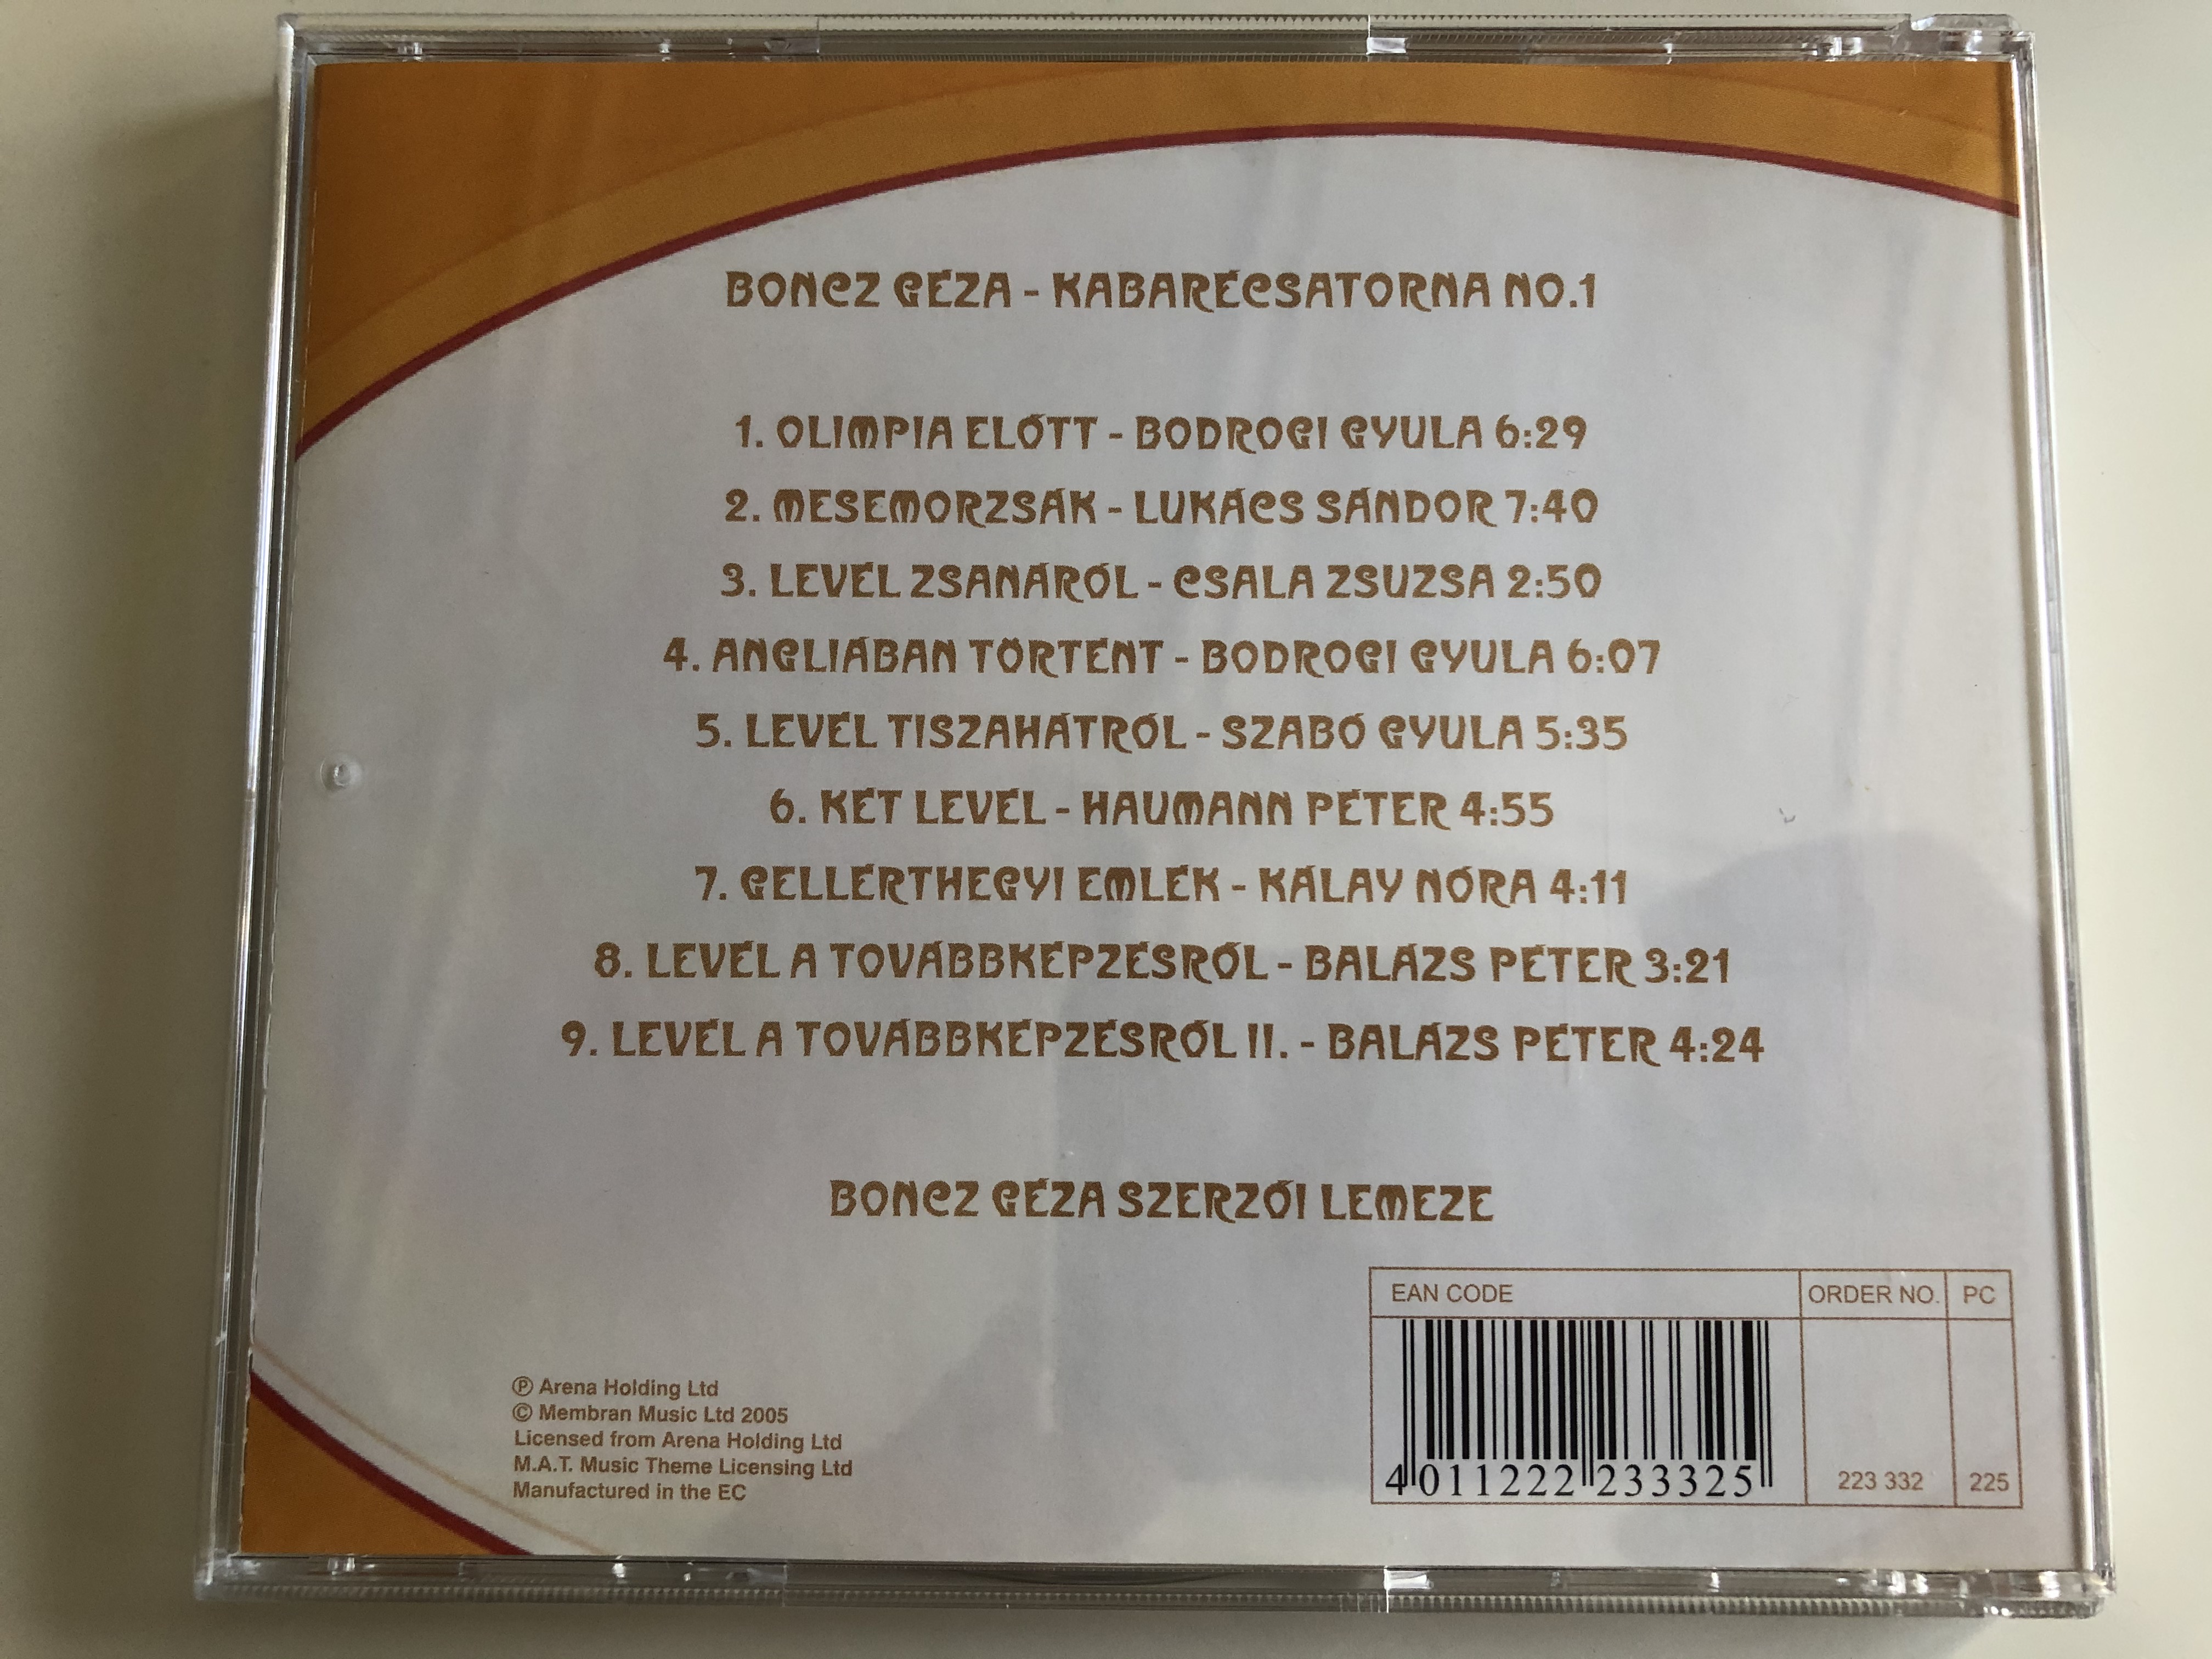 kabar-csatorna-no.-1-bones-geza-szerzoi-lemeze-kozremukodik-bodrogi-gyula-csala-zsuzsa-haumann-peter-balazs-peter-membran-music-audio-cd-2005-223-332-4-.jpg